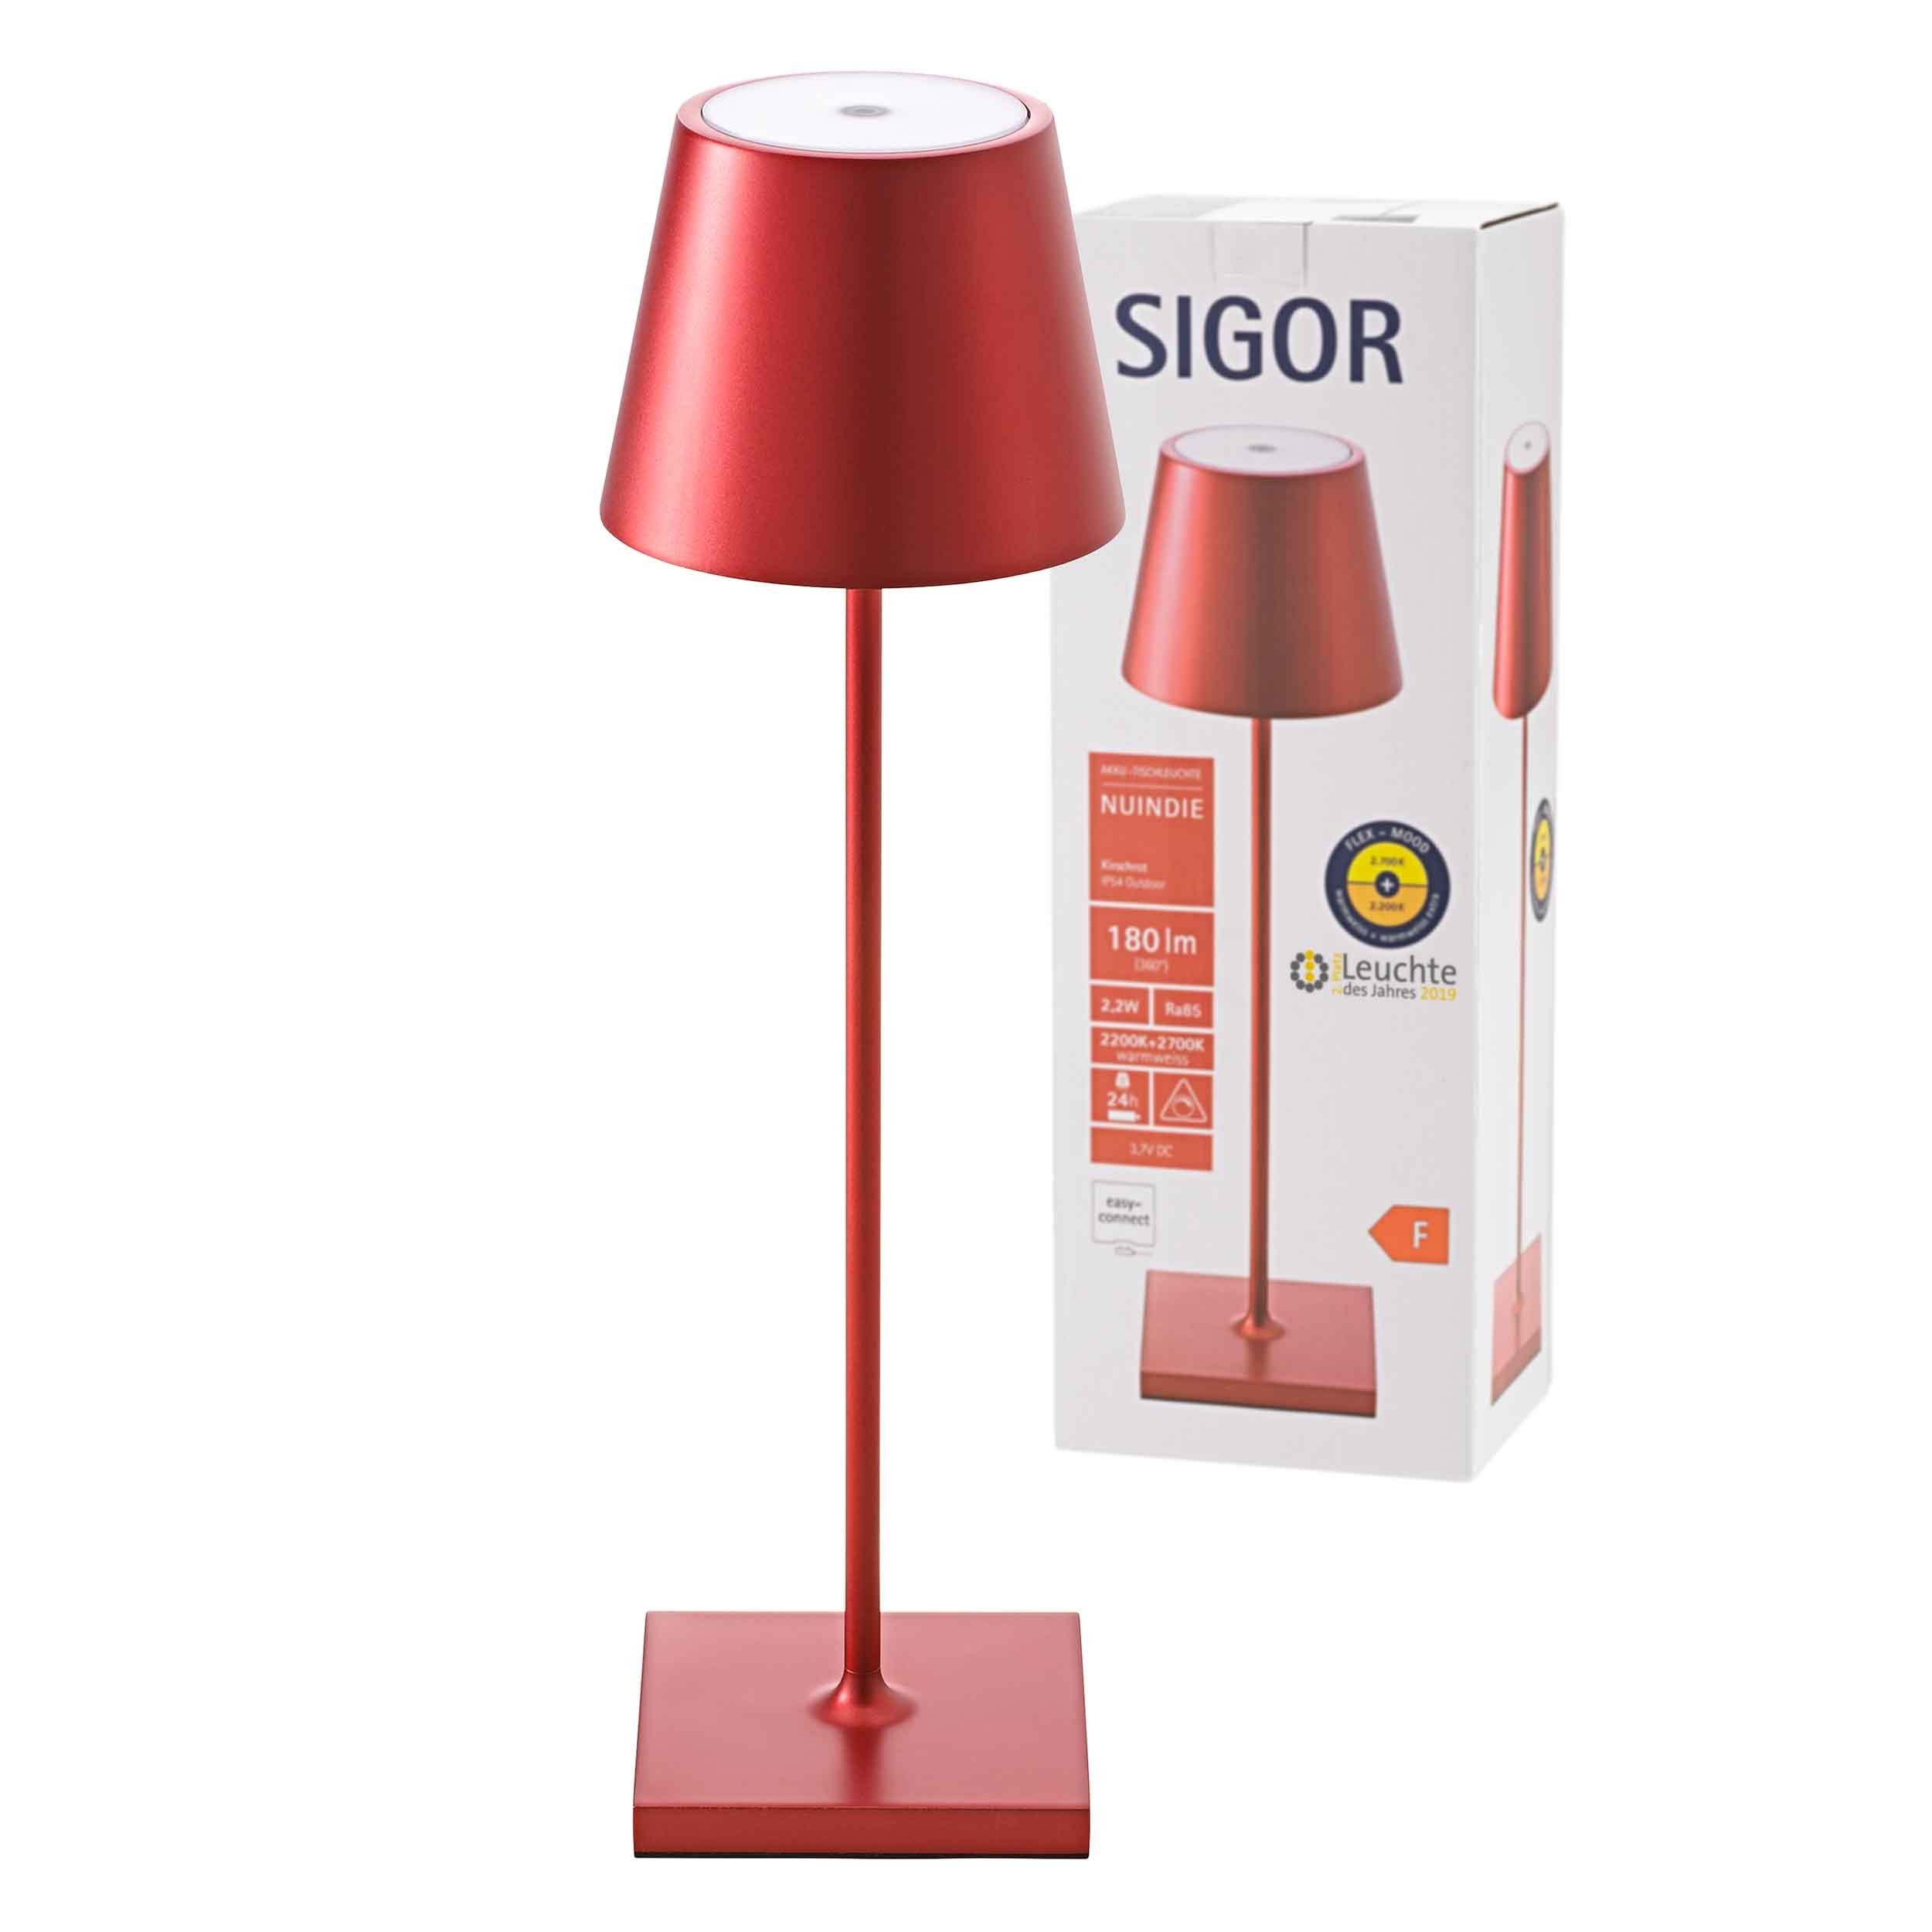 SIGOR Tischleuchte SIGOR LED Tischleuchte LED Akku-Tischleuchte Nuindie eloxiert IP54 Kirschrot